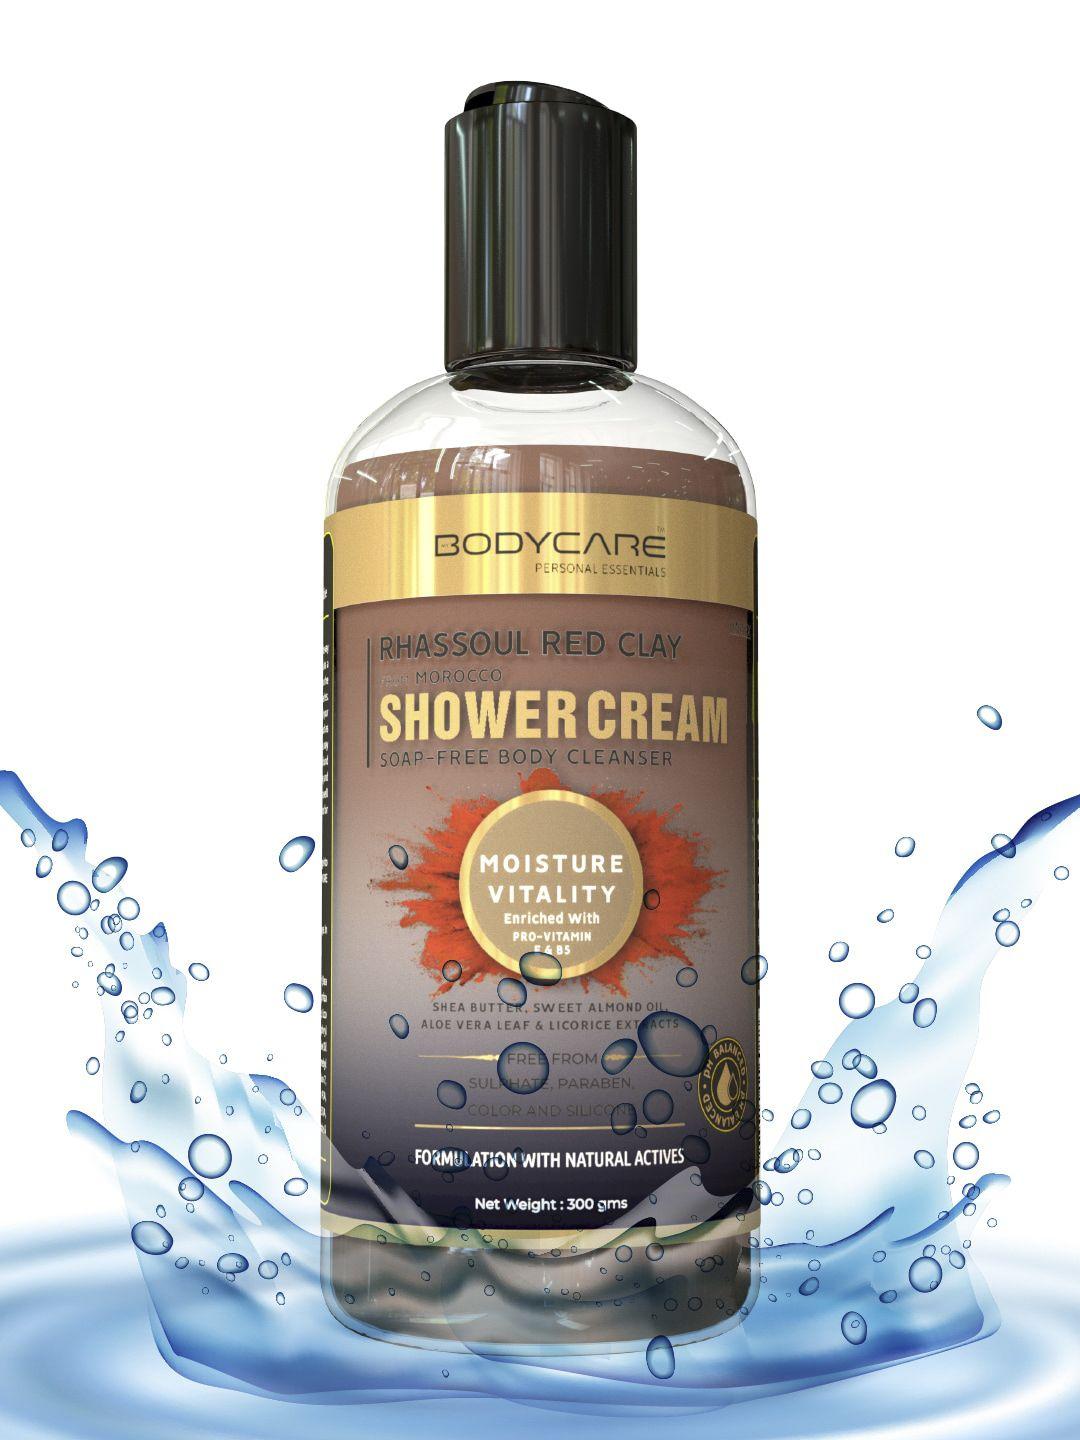 my bodycare moroccan rhassoul red clay shower cream - soap free body wash - 300 g